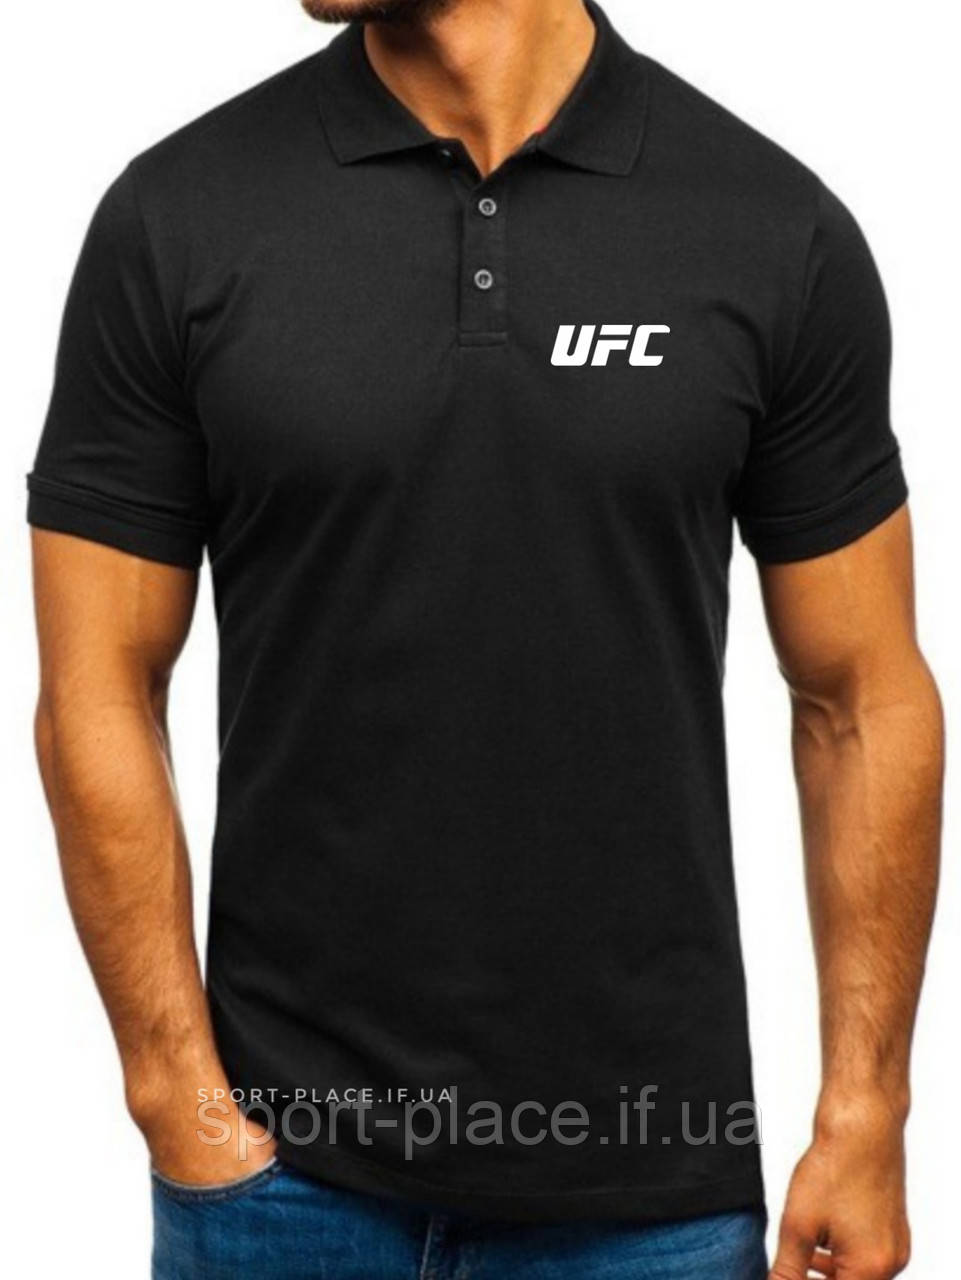 Чоловіча футболка поло UFC (Юфс) чорна (маленька емблема) бавовна